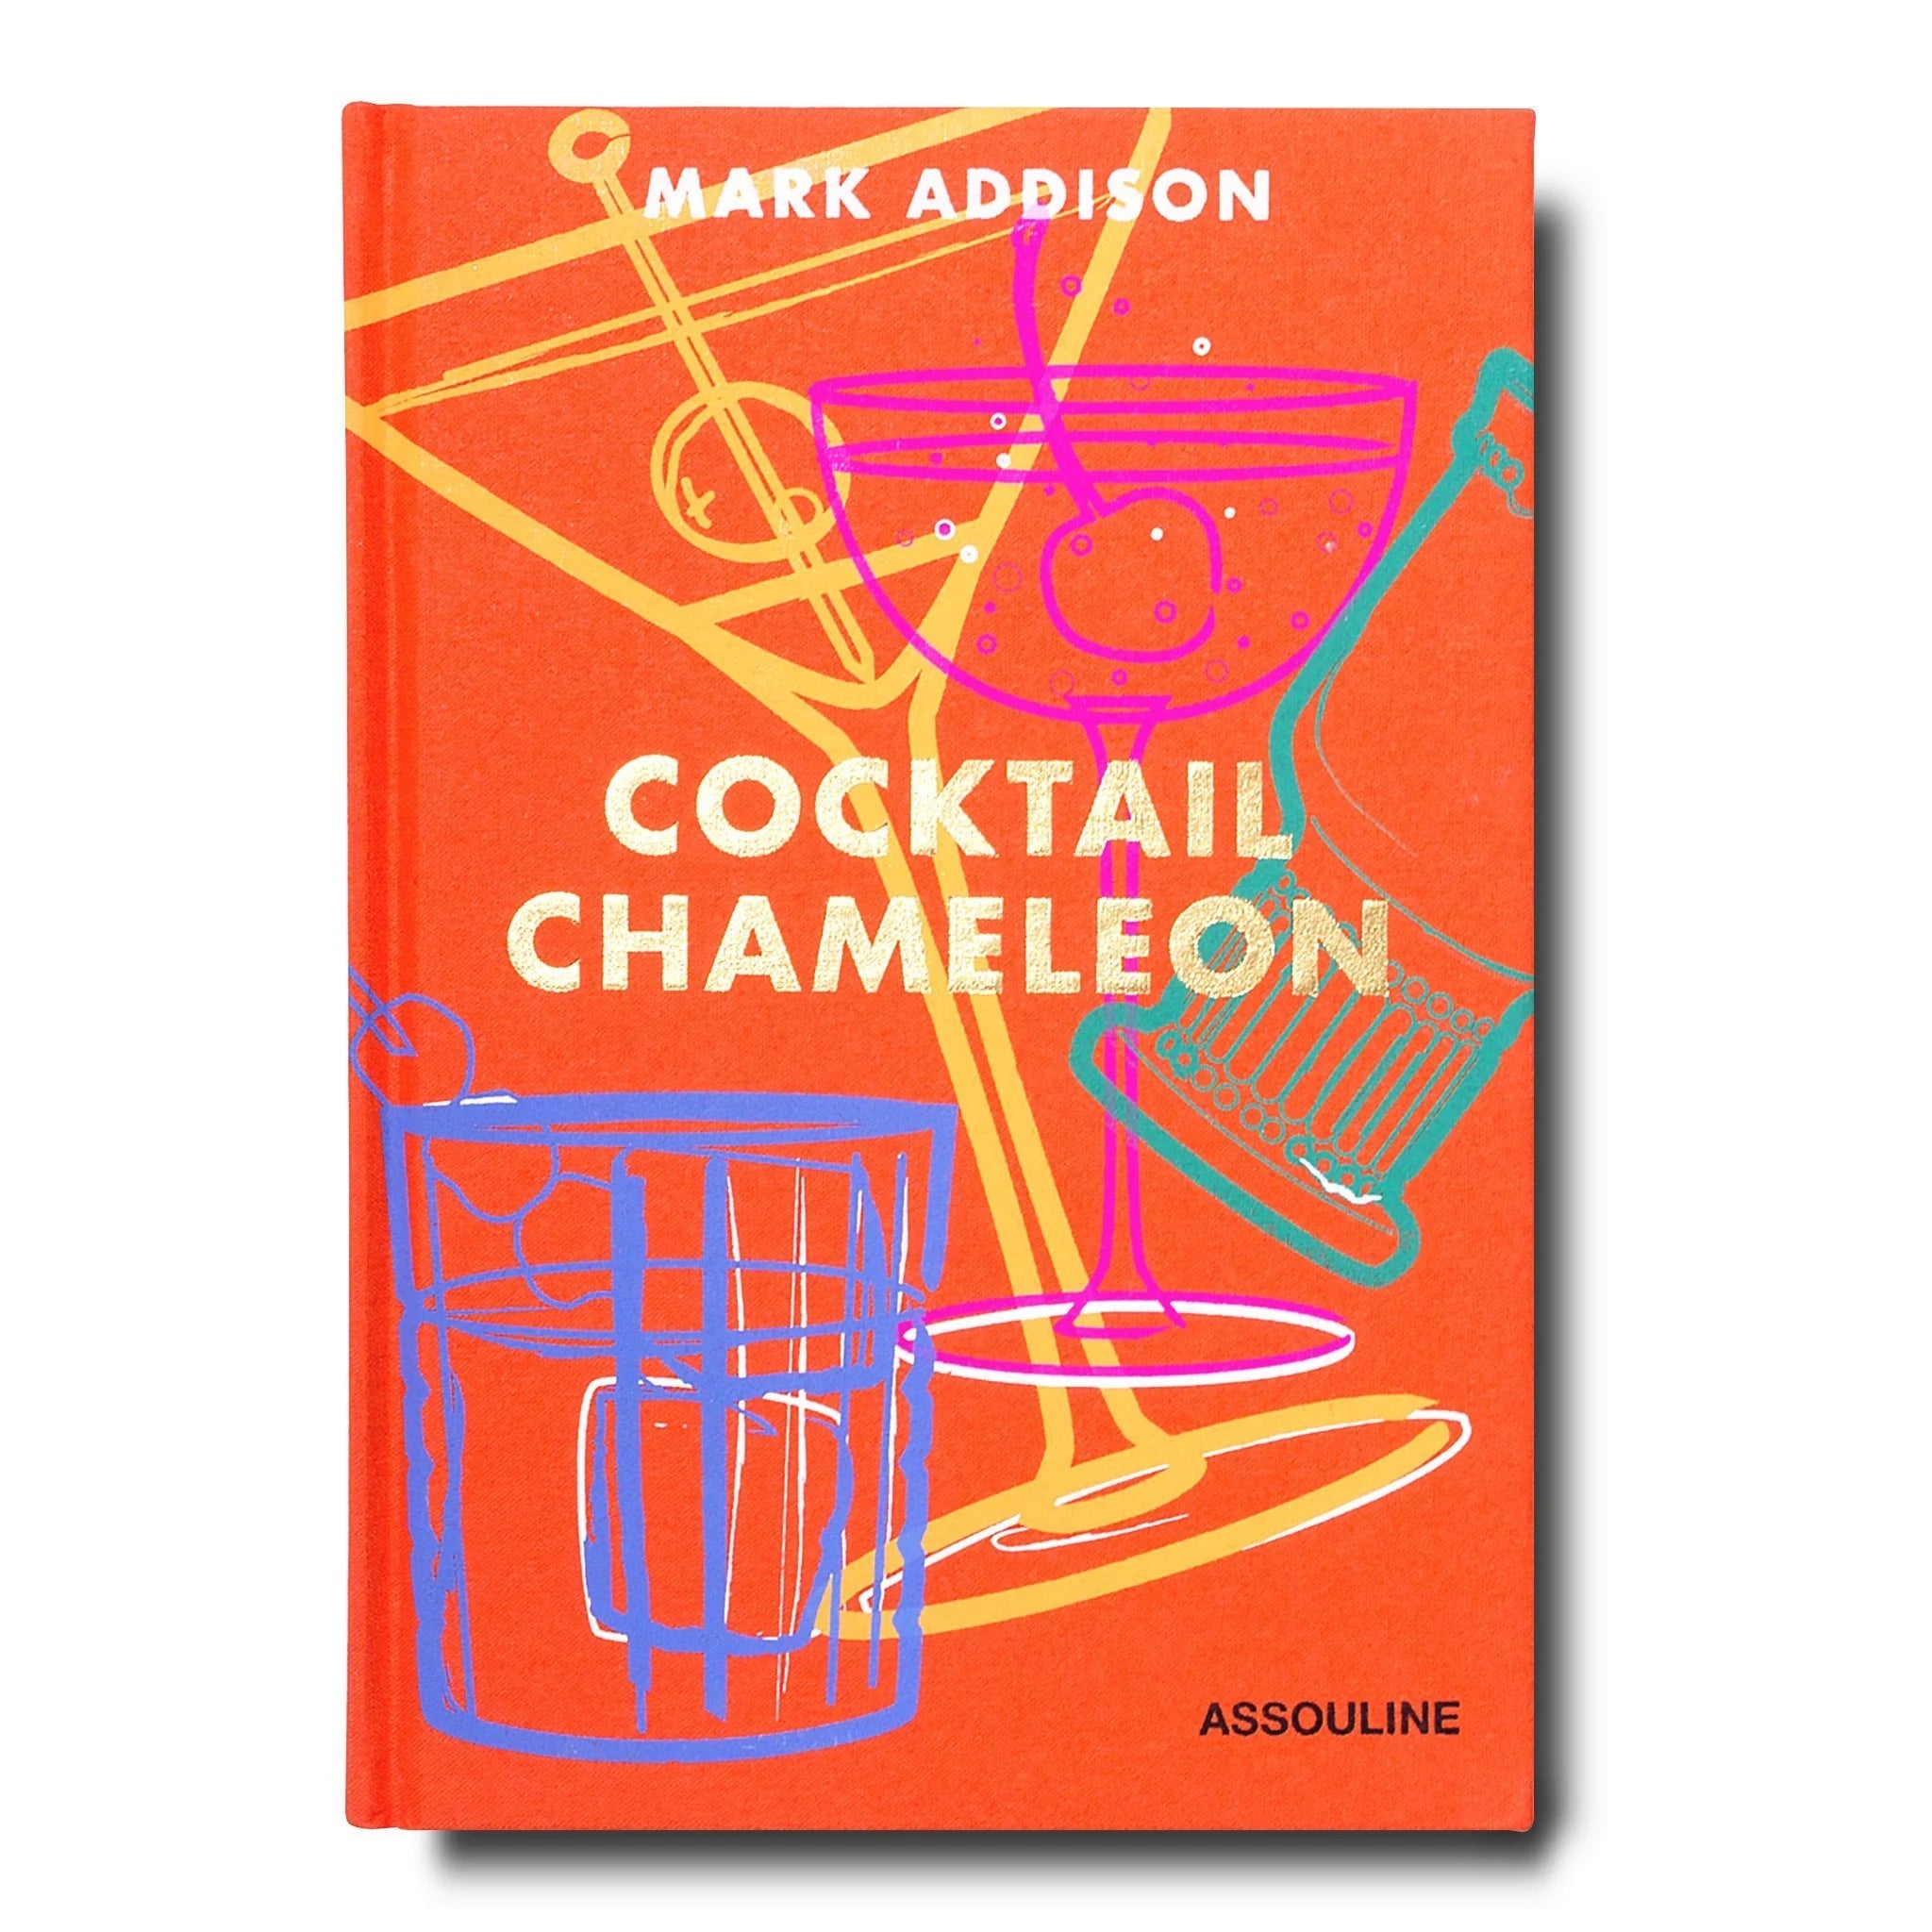 COCKTAIL CHAMELEON, libro de interiorismo de la editorial de lujo Assouline